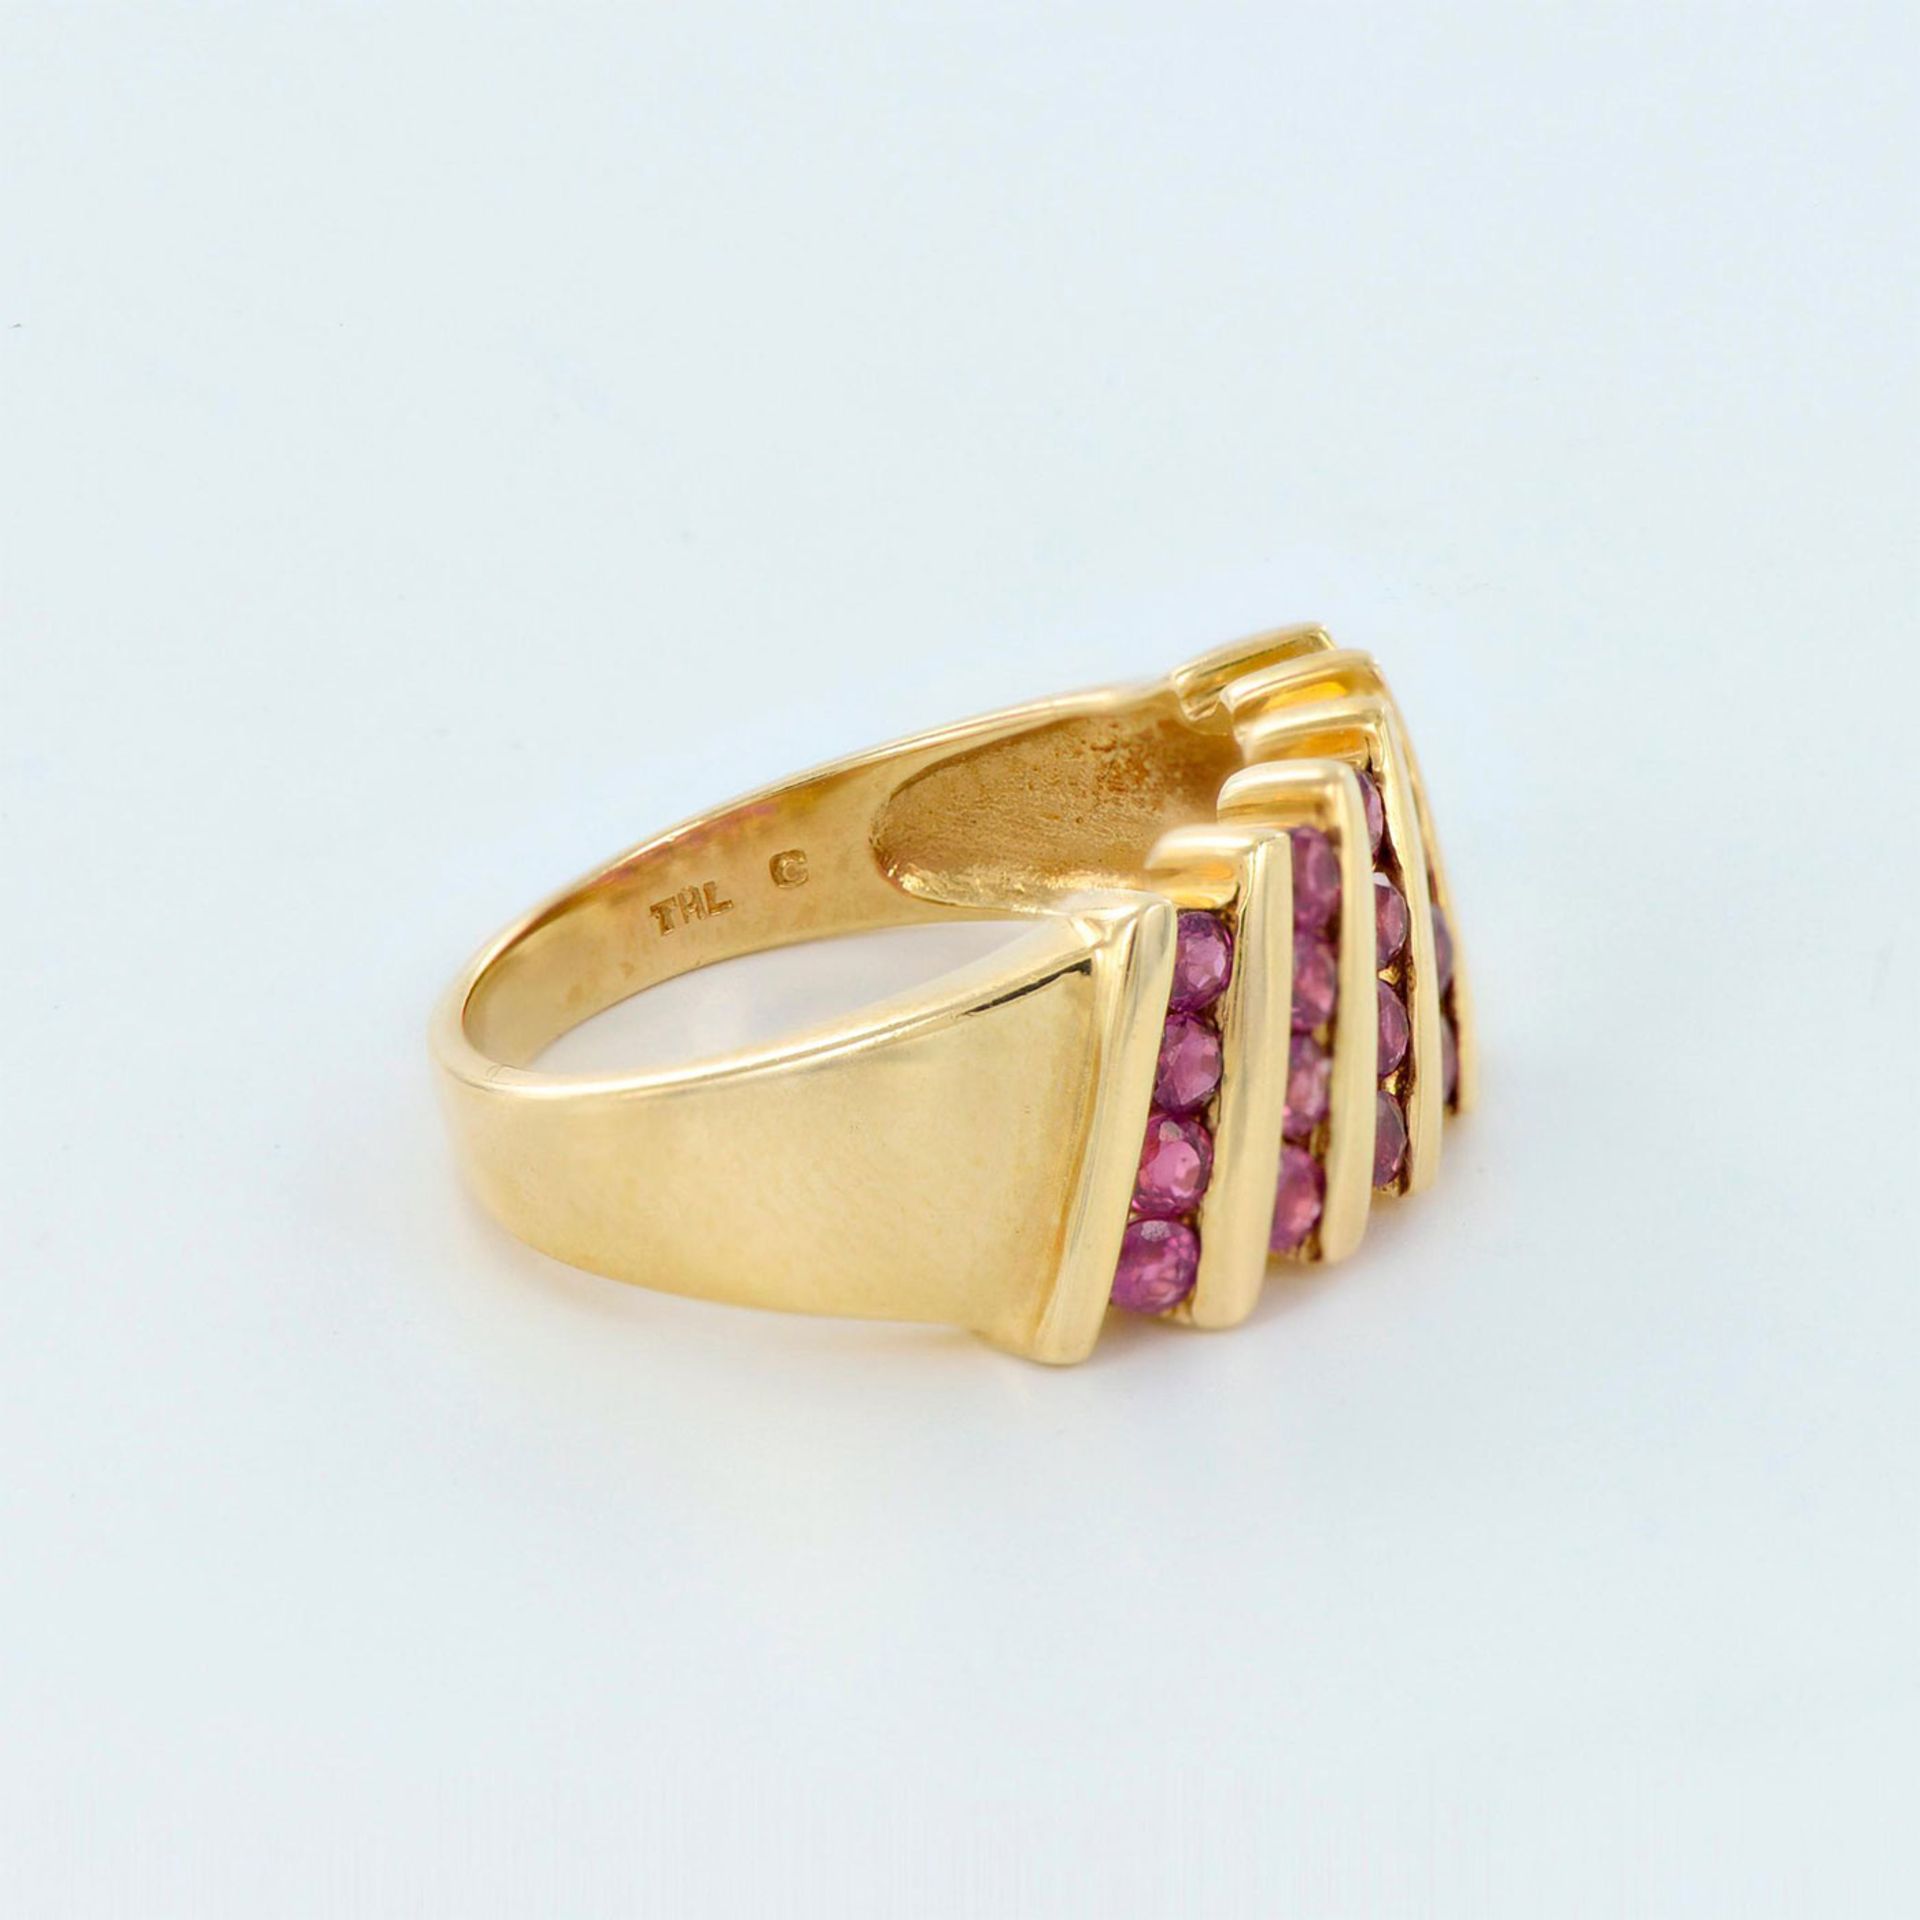 Samuel Aaron, Inc. 10k Gold with Pink Gemstones Ring - Image 4 of 5